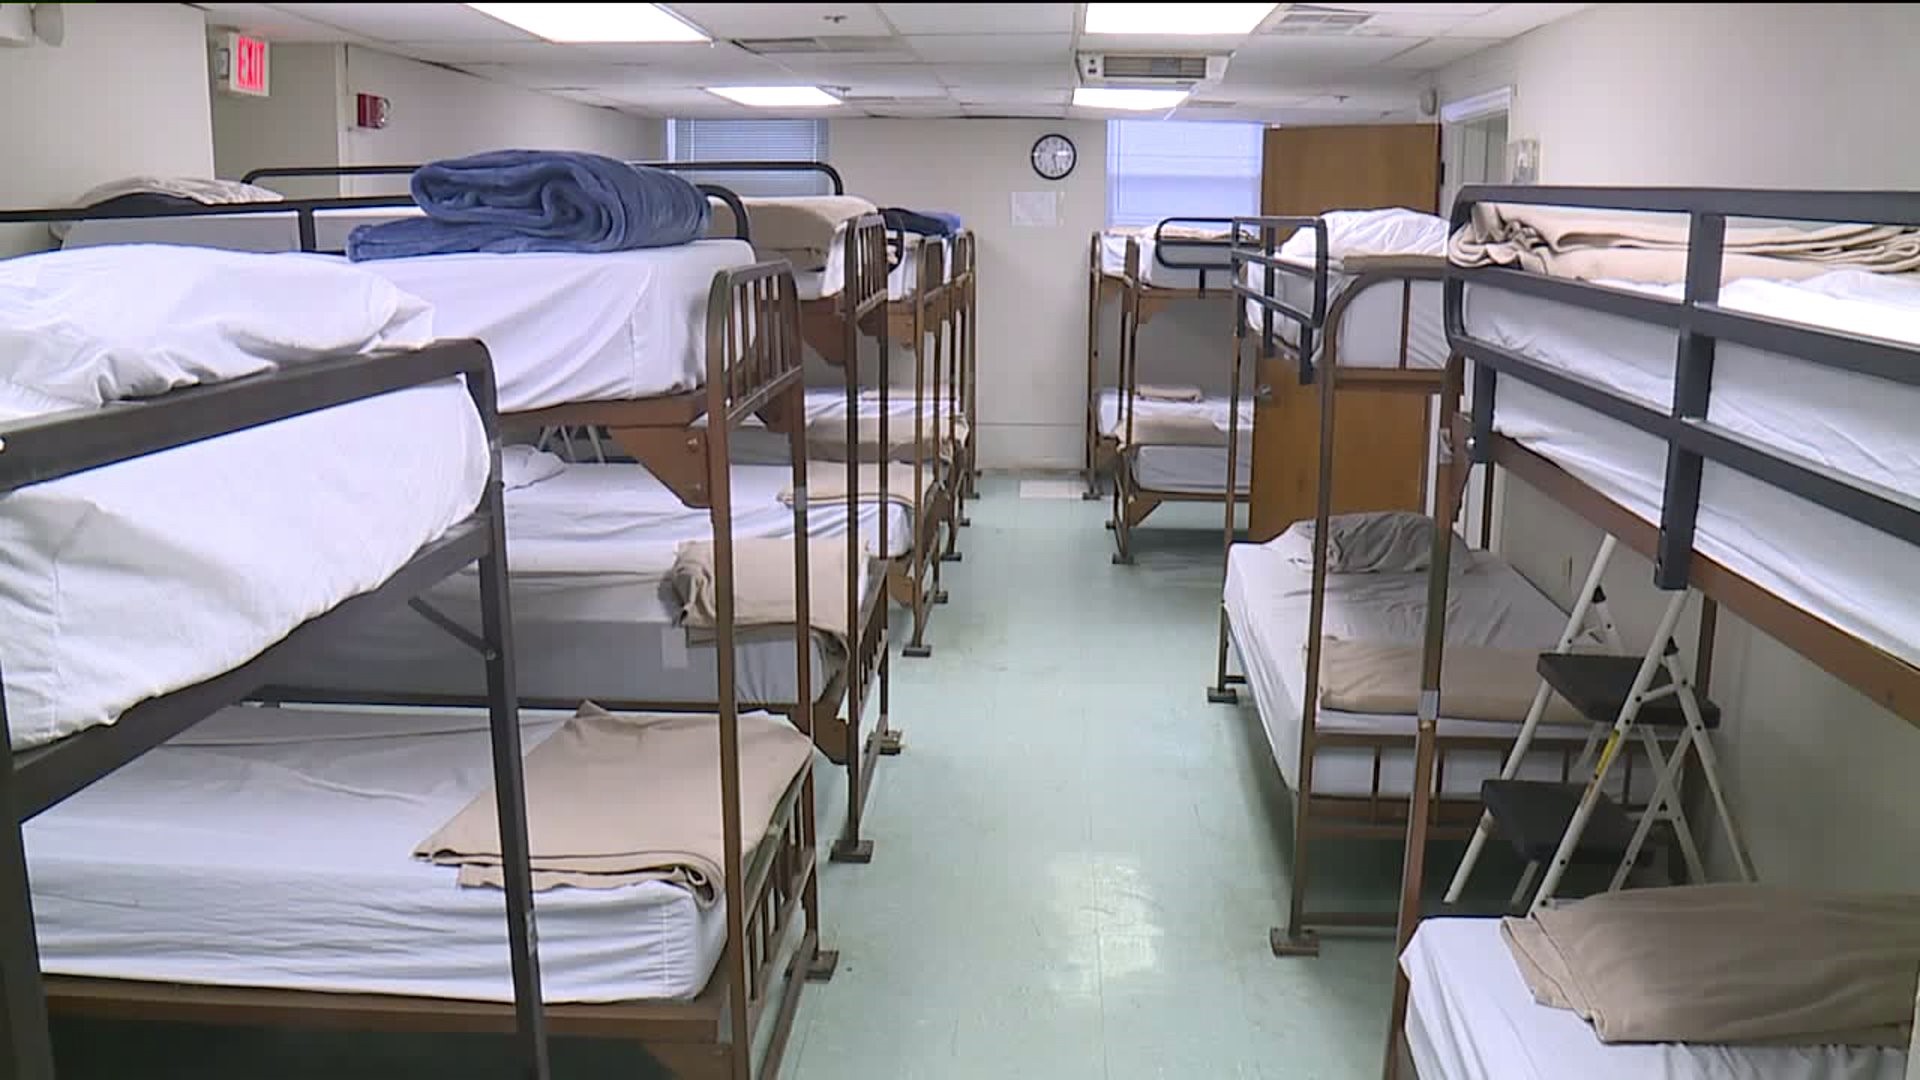 Scranton Offers Space for Emergency Overnight Homeless Shelter